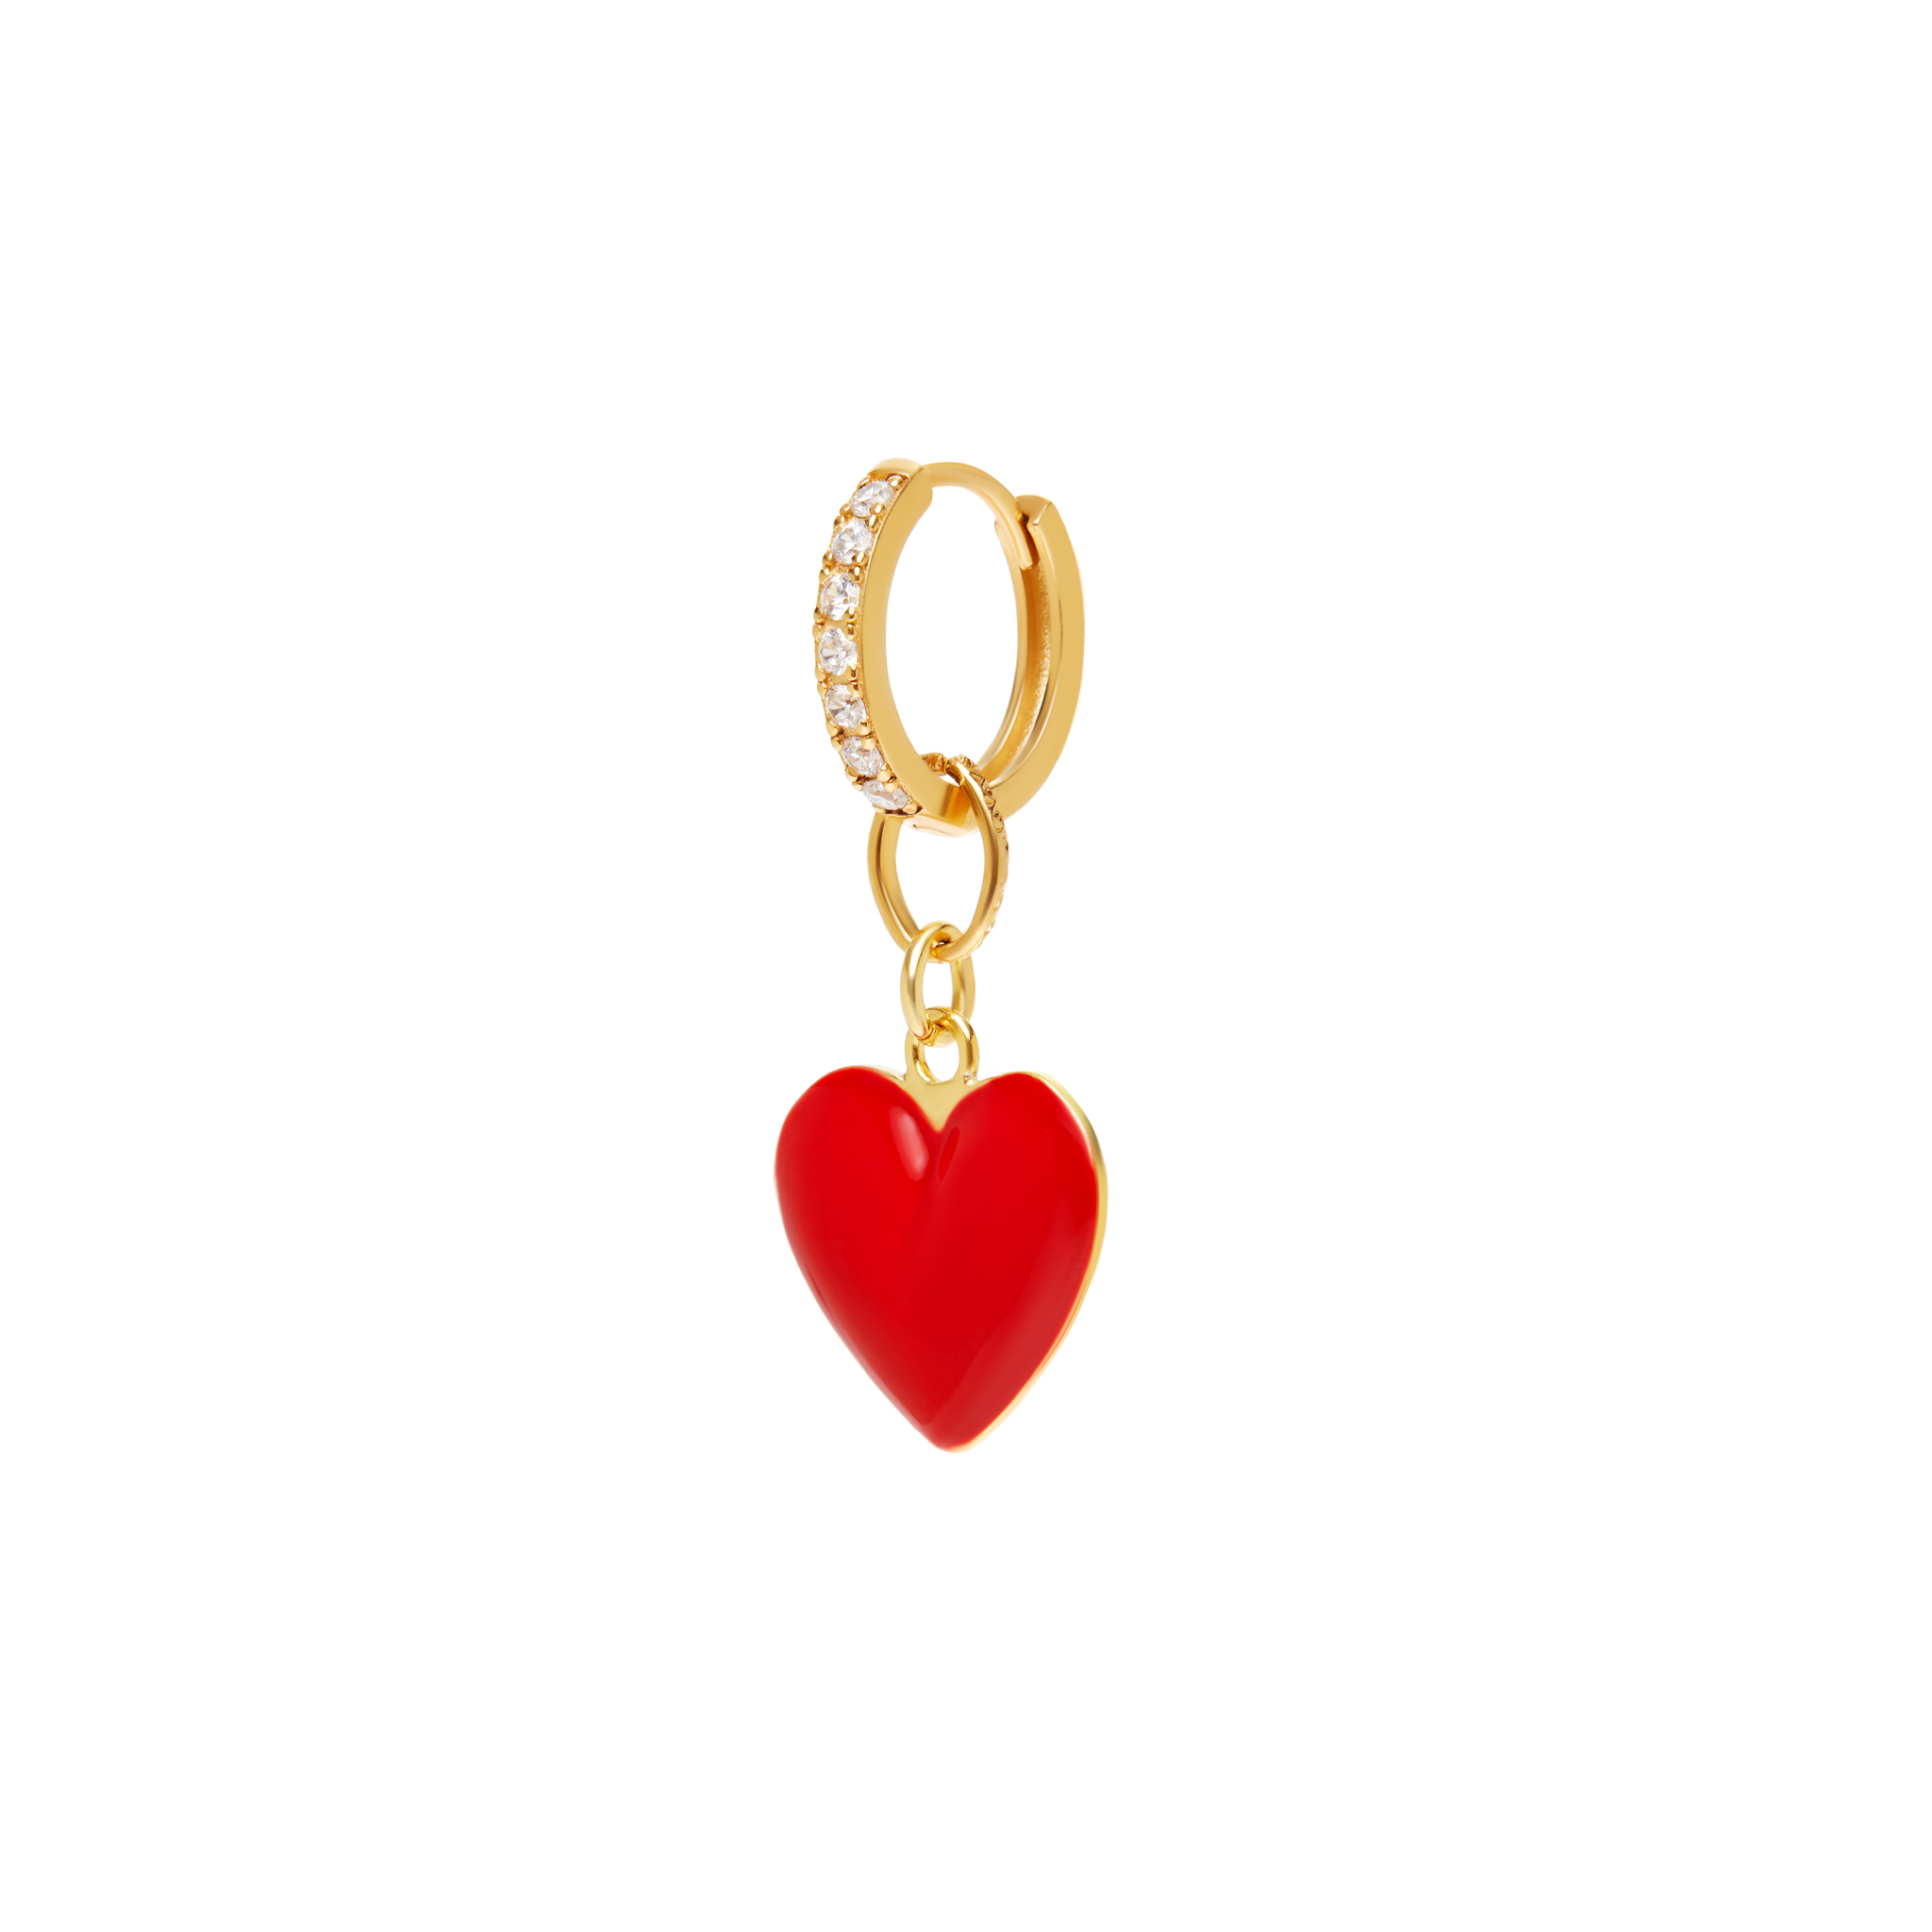 wilhelmina garcia серьга fairy heart earring – red WILHELMINA GARCIA Моносерьга Gold Red Heart Big Earring